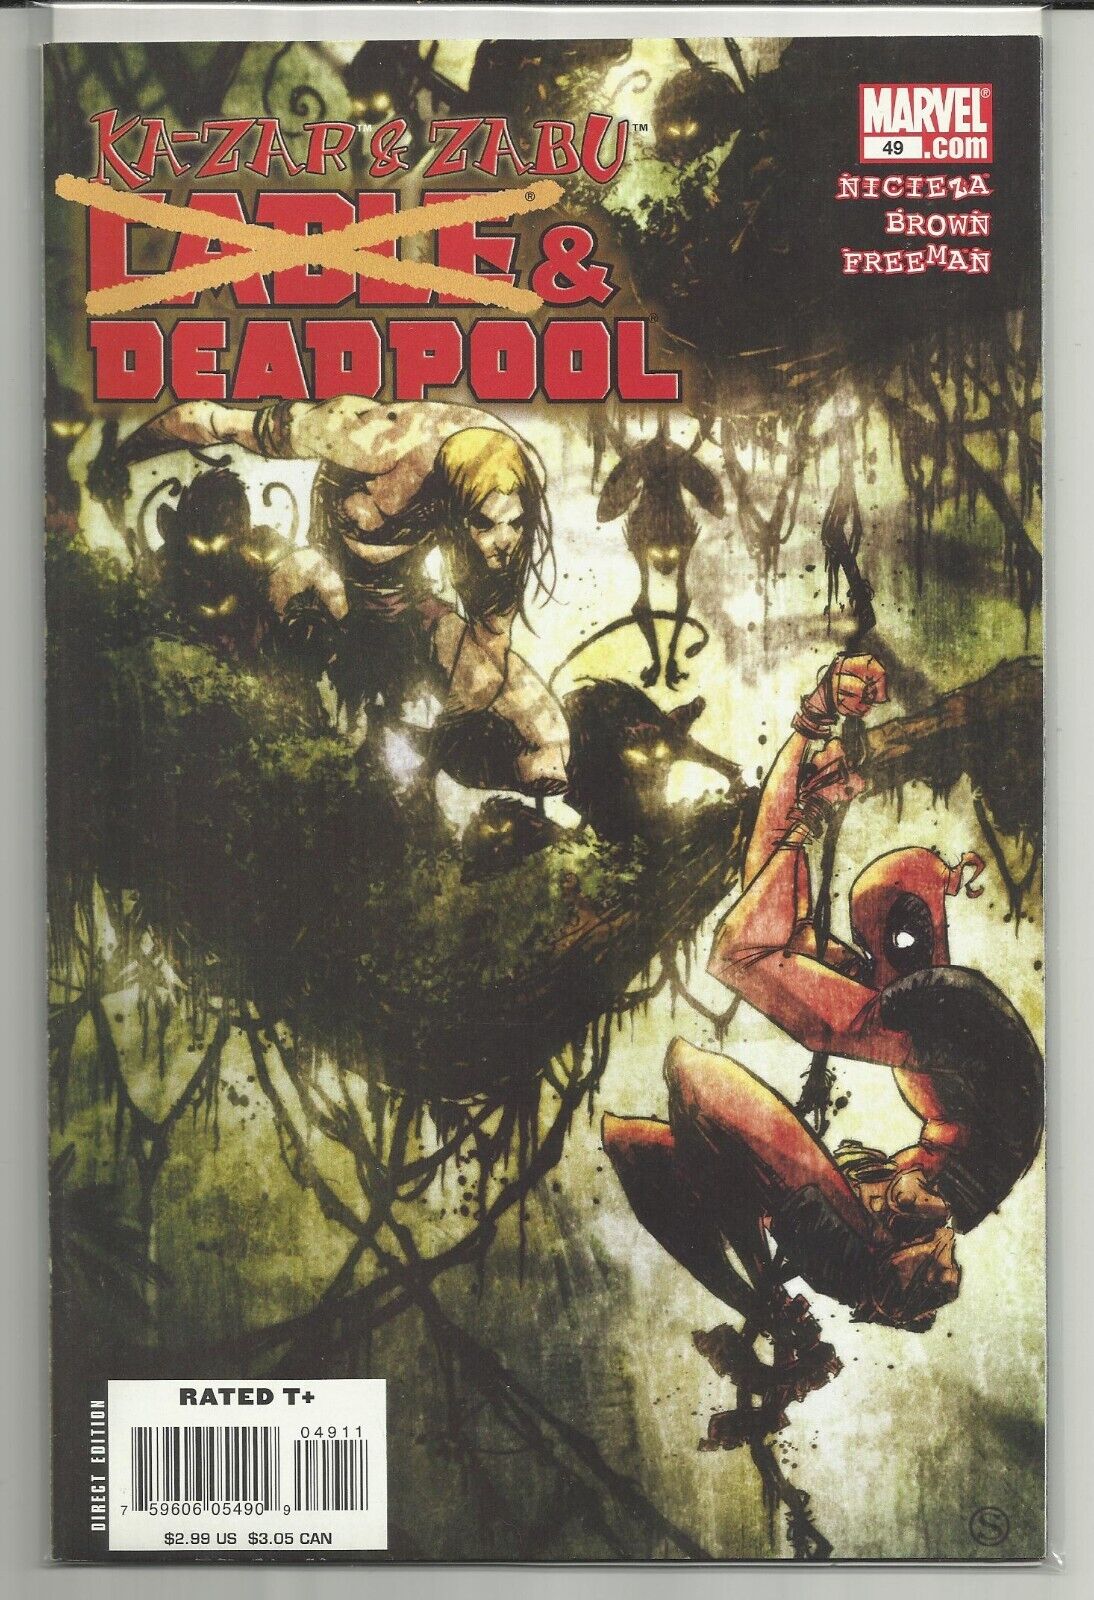 2008 Cable & Deadpool #49 (Marvel) SKOTTIE YOUNG Cover Comic Book NM/UNREAD